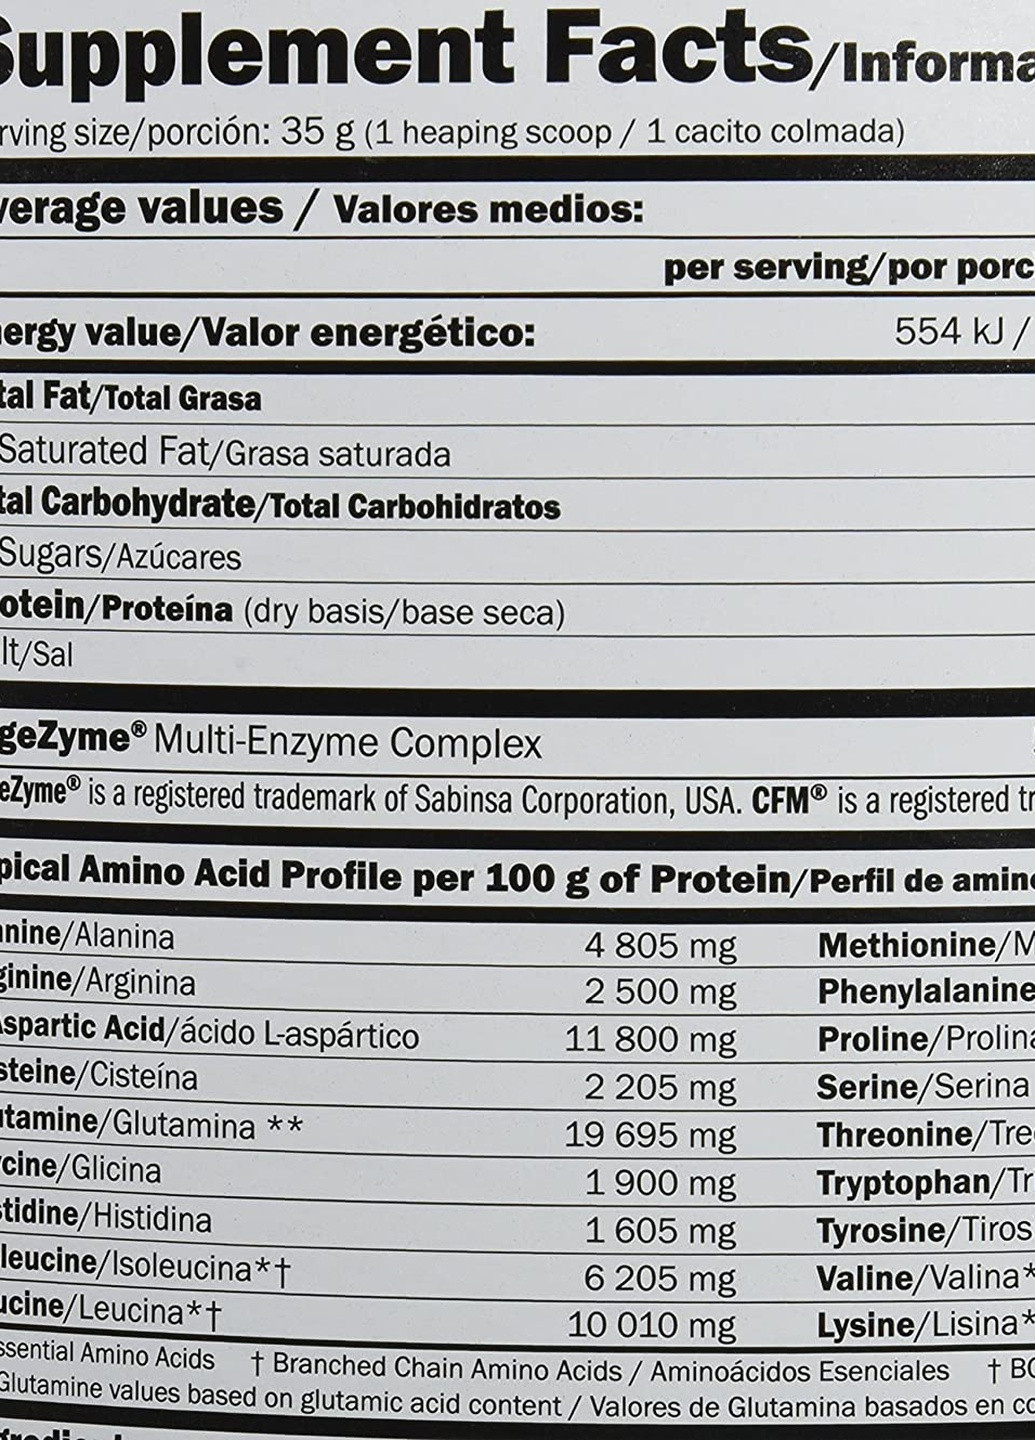 Протеїн WheyPro FUSION 500g (Vanilla) Amix Nutrition (257658873)